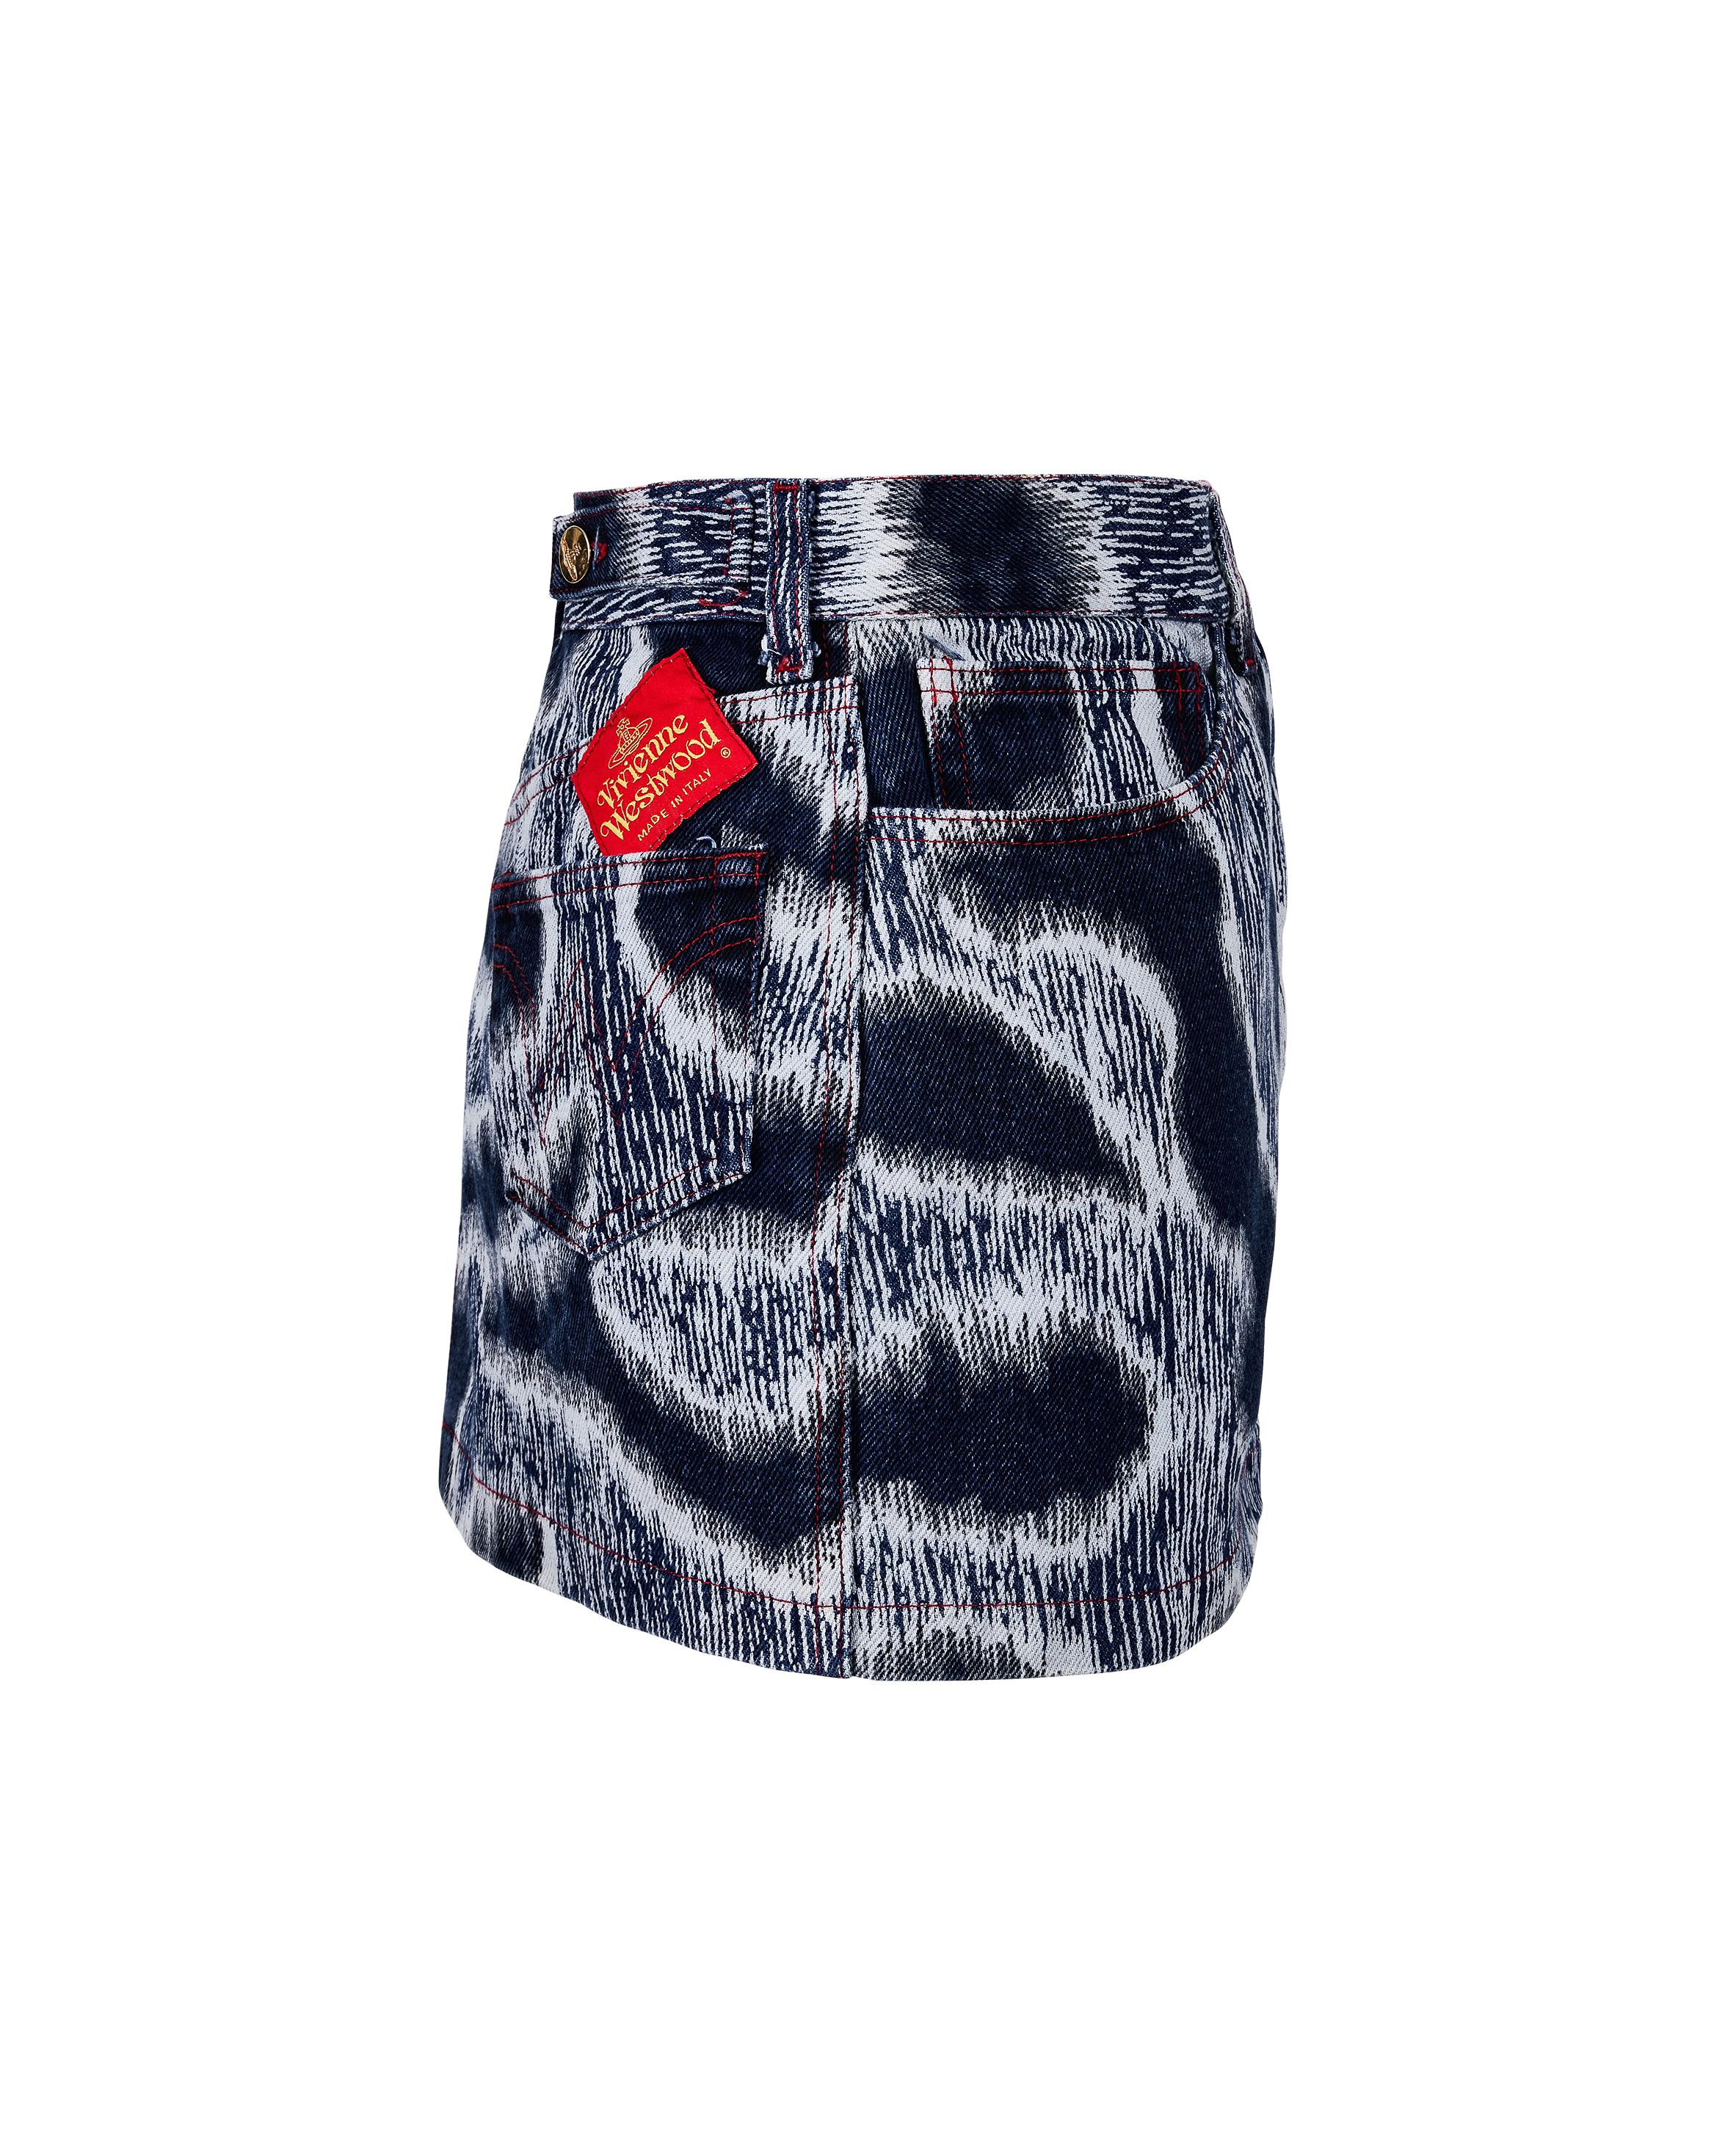 S/S 1994 Vivienne Westwood Blue Leopard Print Denim Skirt Set 6